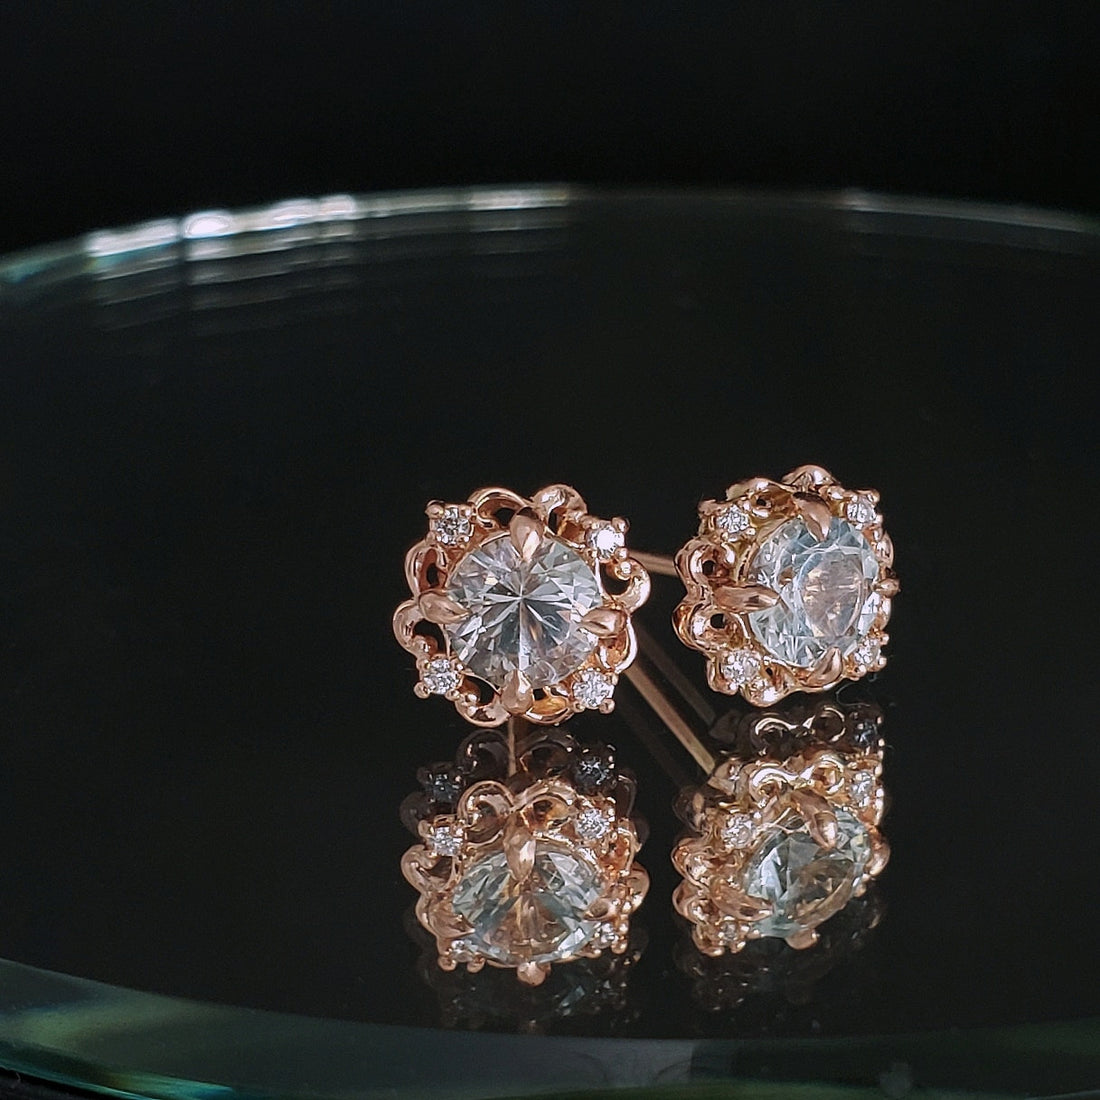 Crown Earrings with Aquamarine and Diamonds